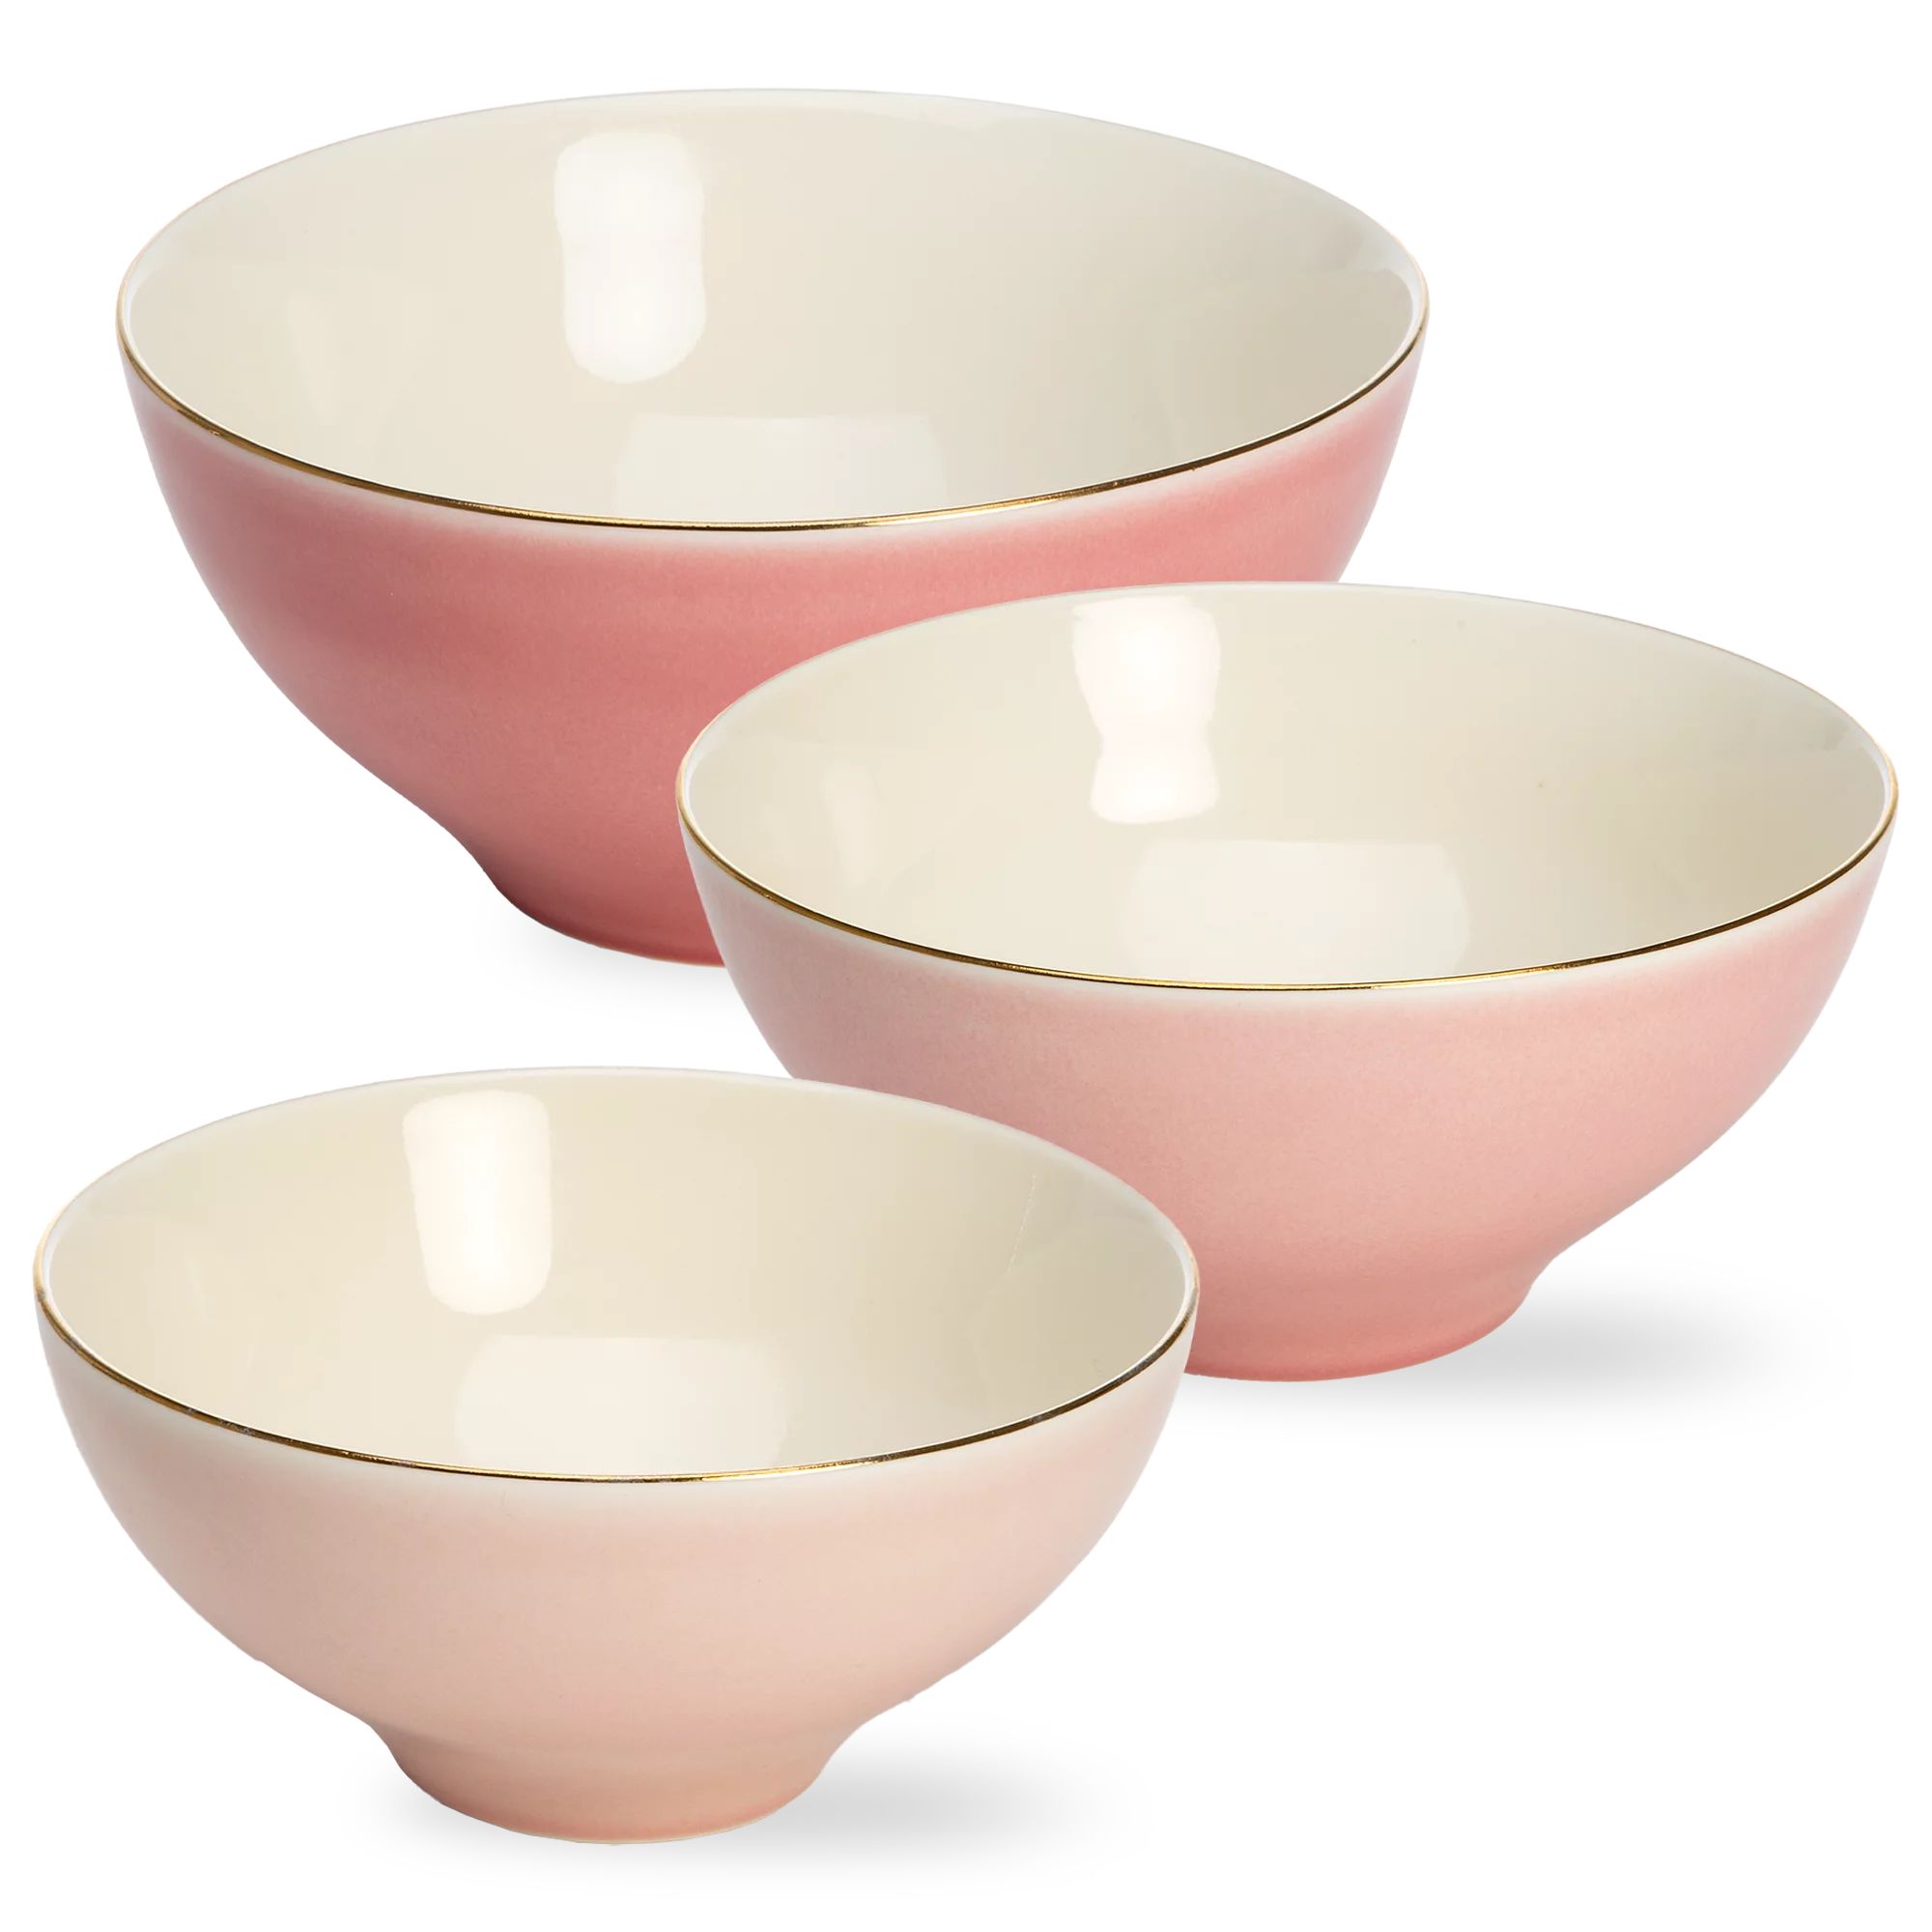 Paris Hilton 3-Piece Ceramic Bowl Set, Nesting Mixing Bowls, Dishwasher Safe, Pink and Gold | Walmart (US)